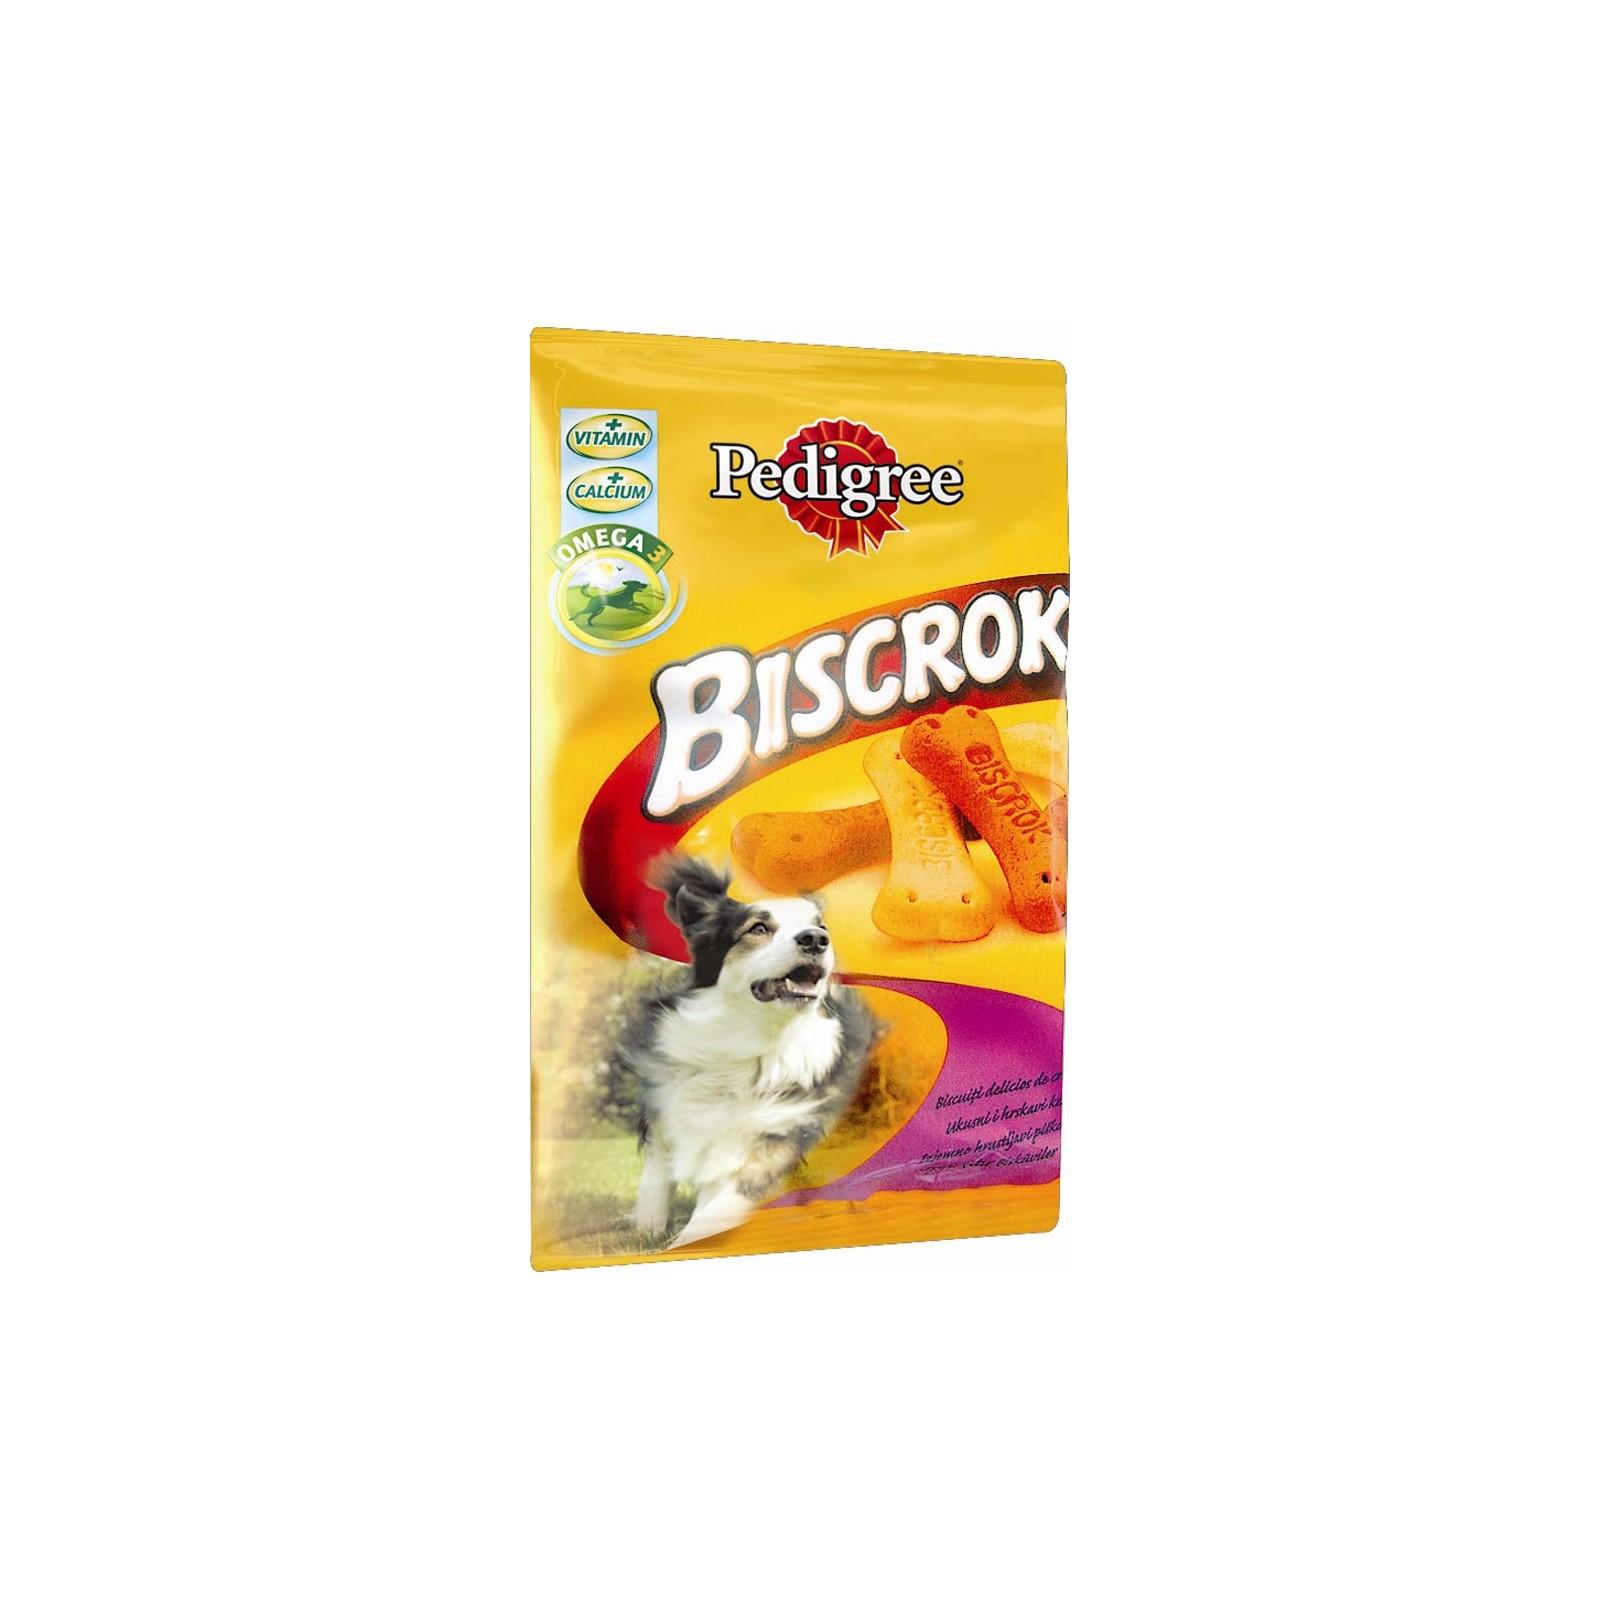 Selected image for Pedigree Dog Biscrok 200g